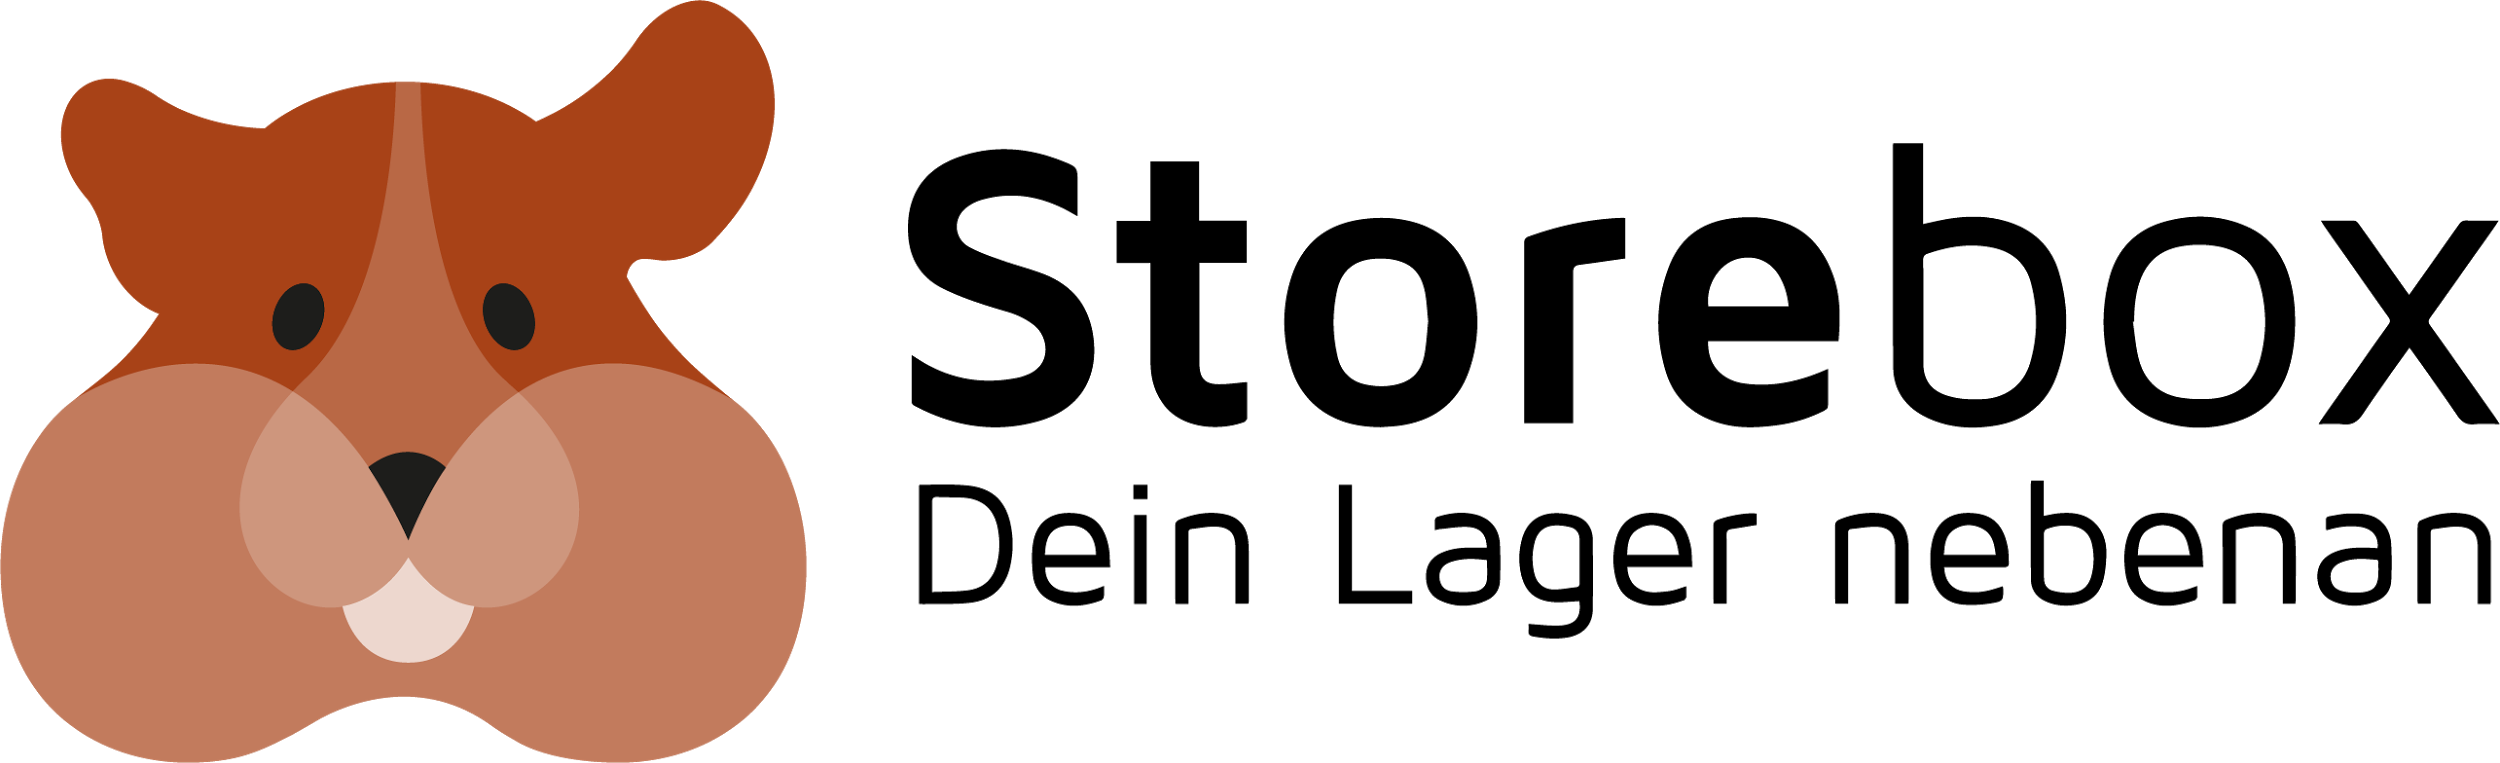 Storebox logo